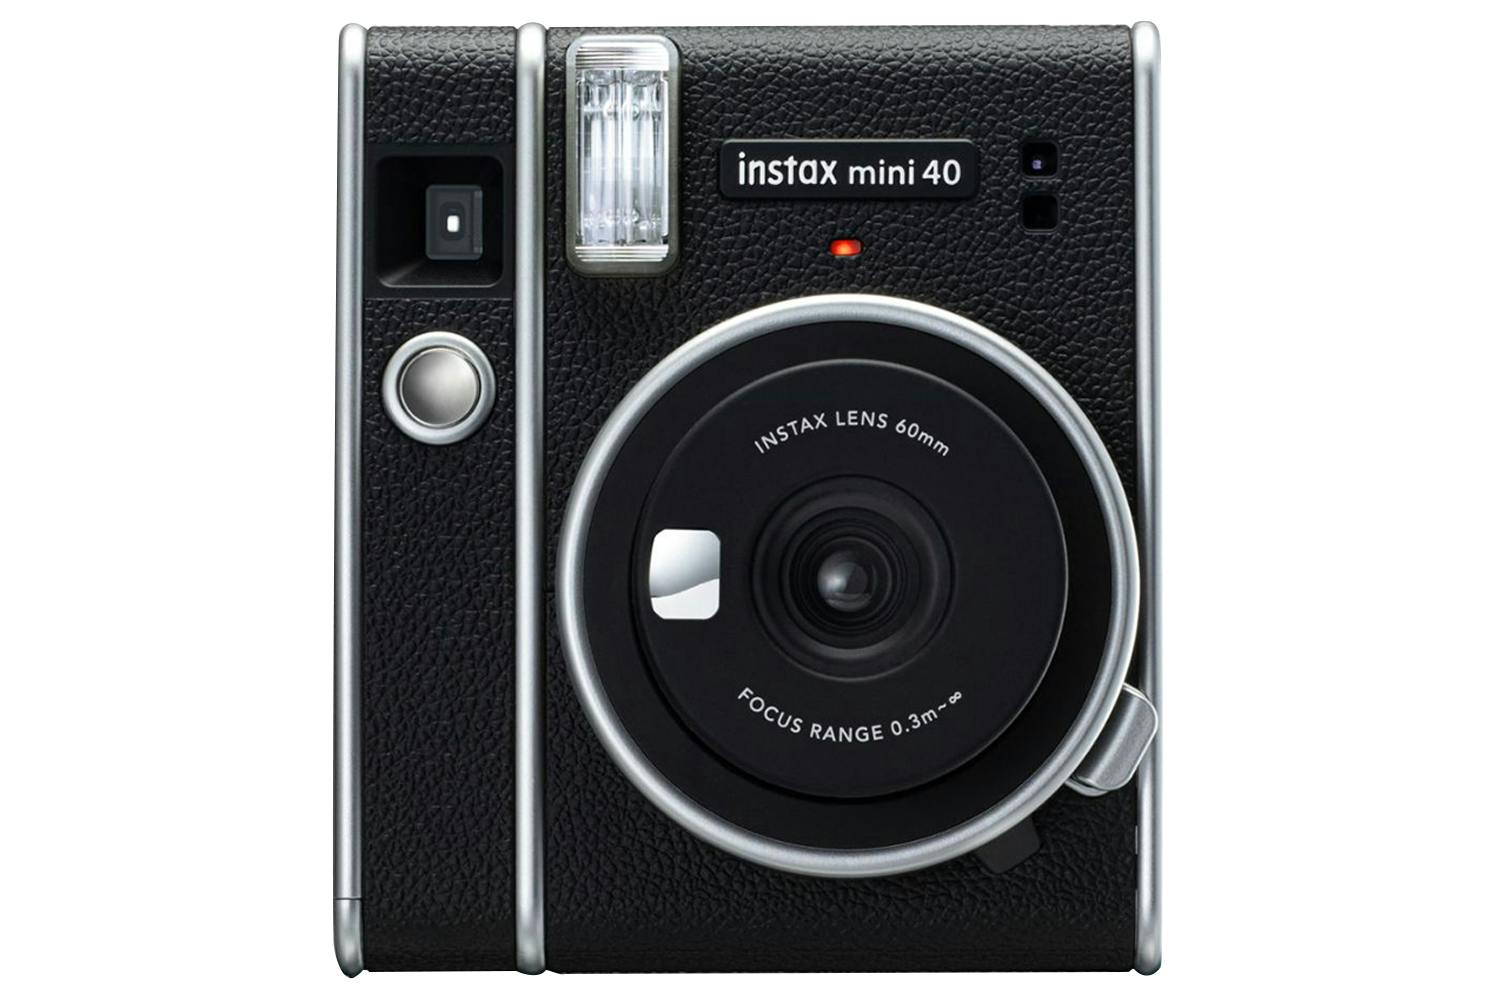 Polaroid Camera Bag for 600 Box Style Cameras (Bag Only!) – Vintage  Polaroid Instant Cameras